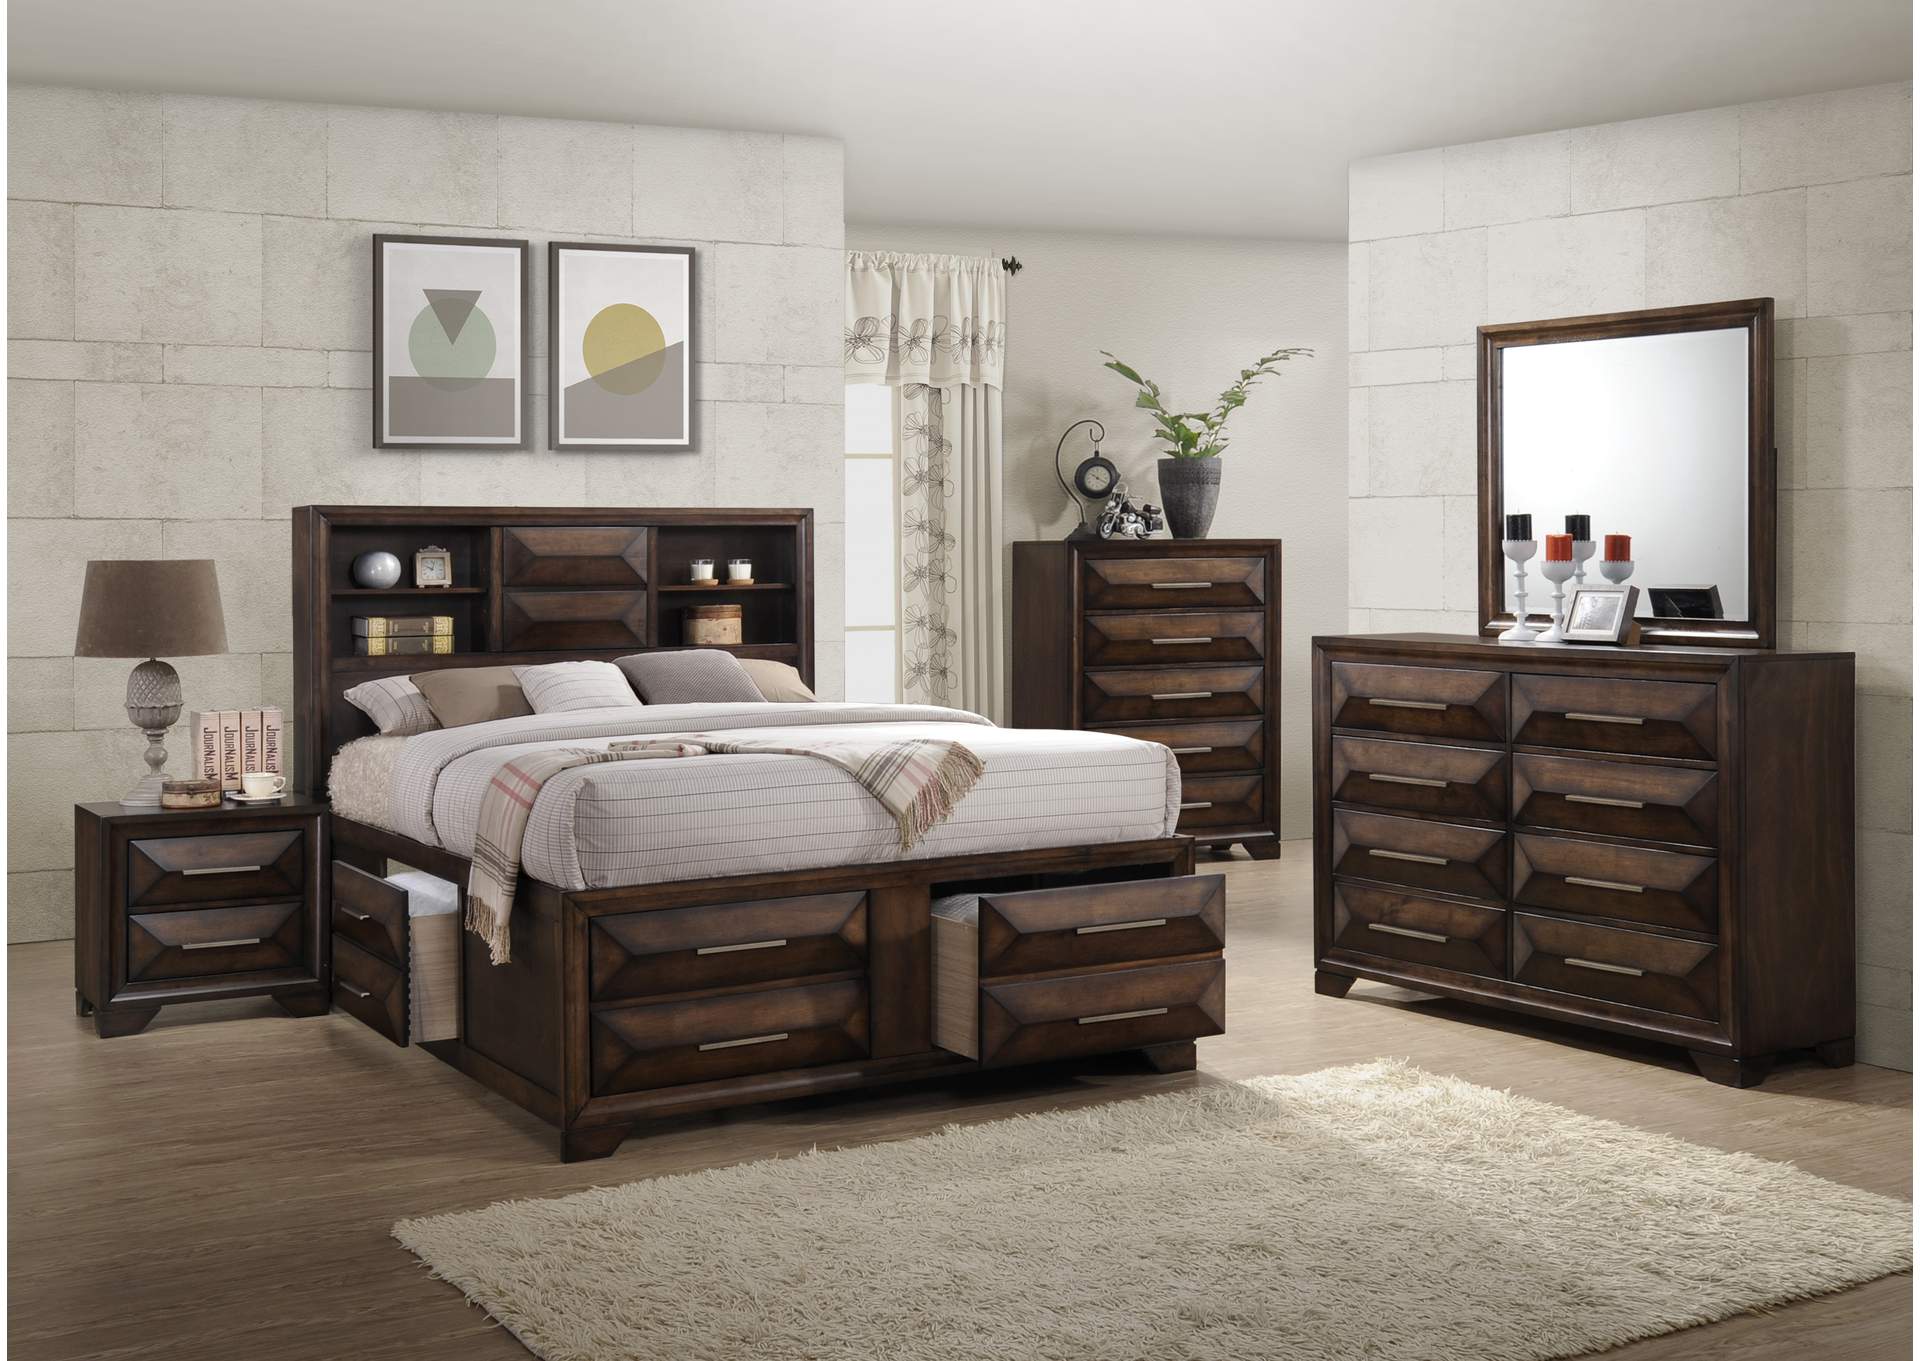 Furniture World Petal Ms 1035 Anthem King Bed Storage With